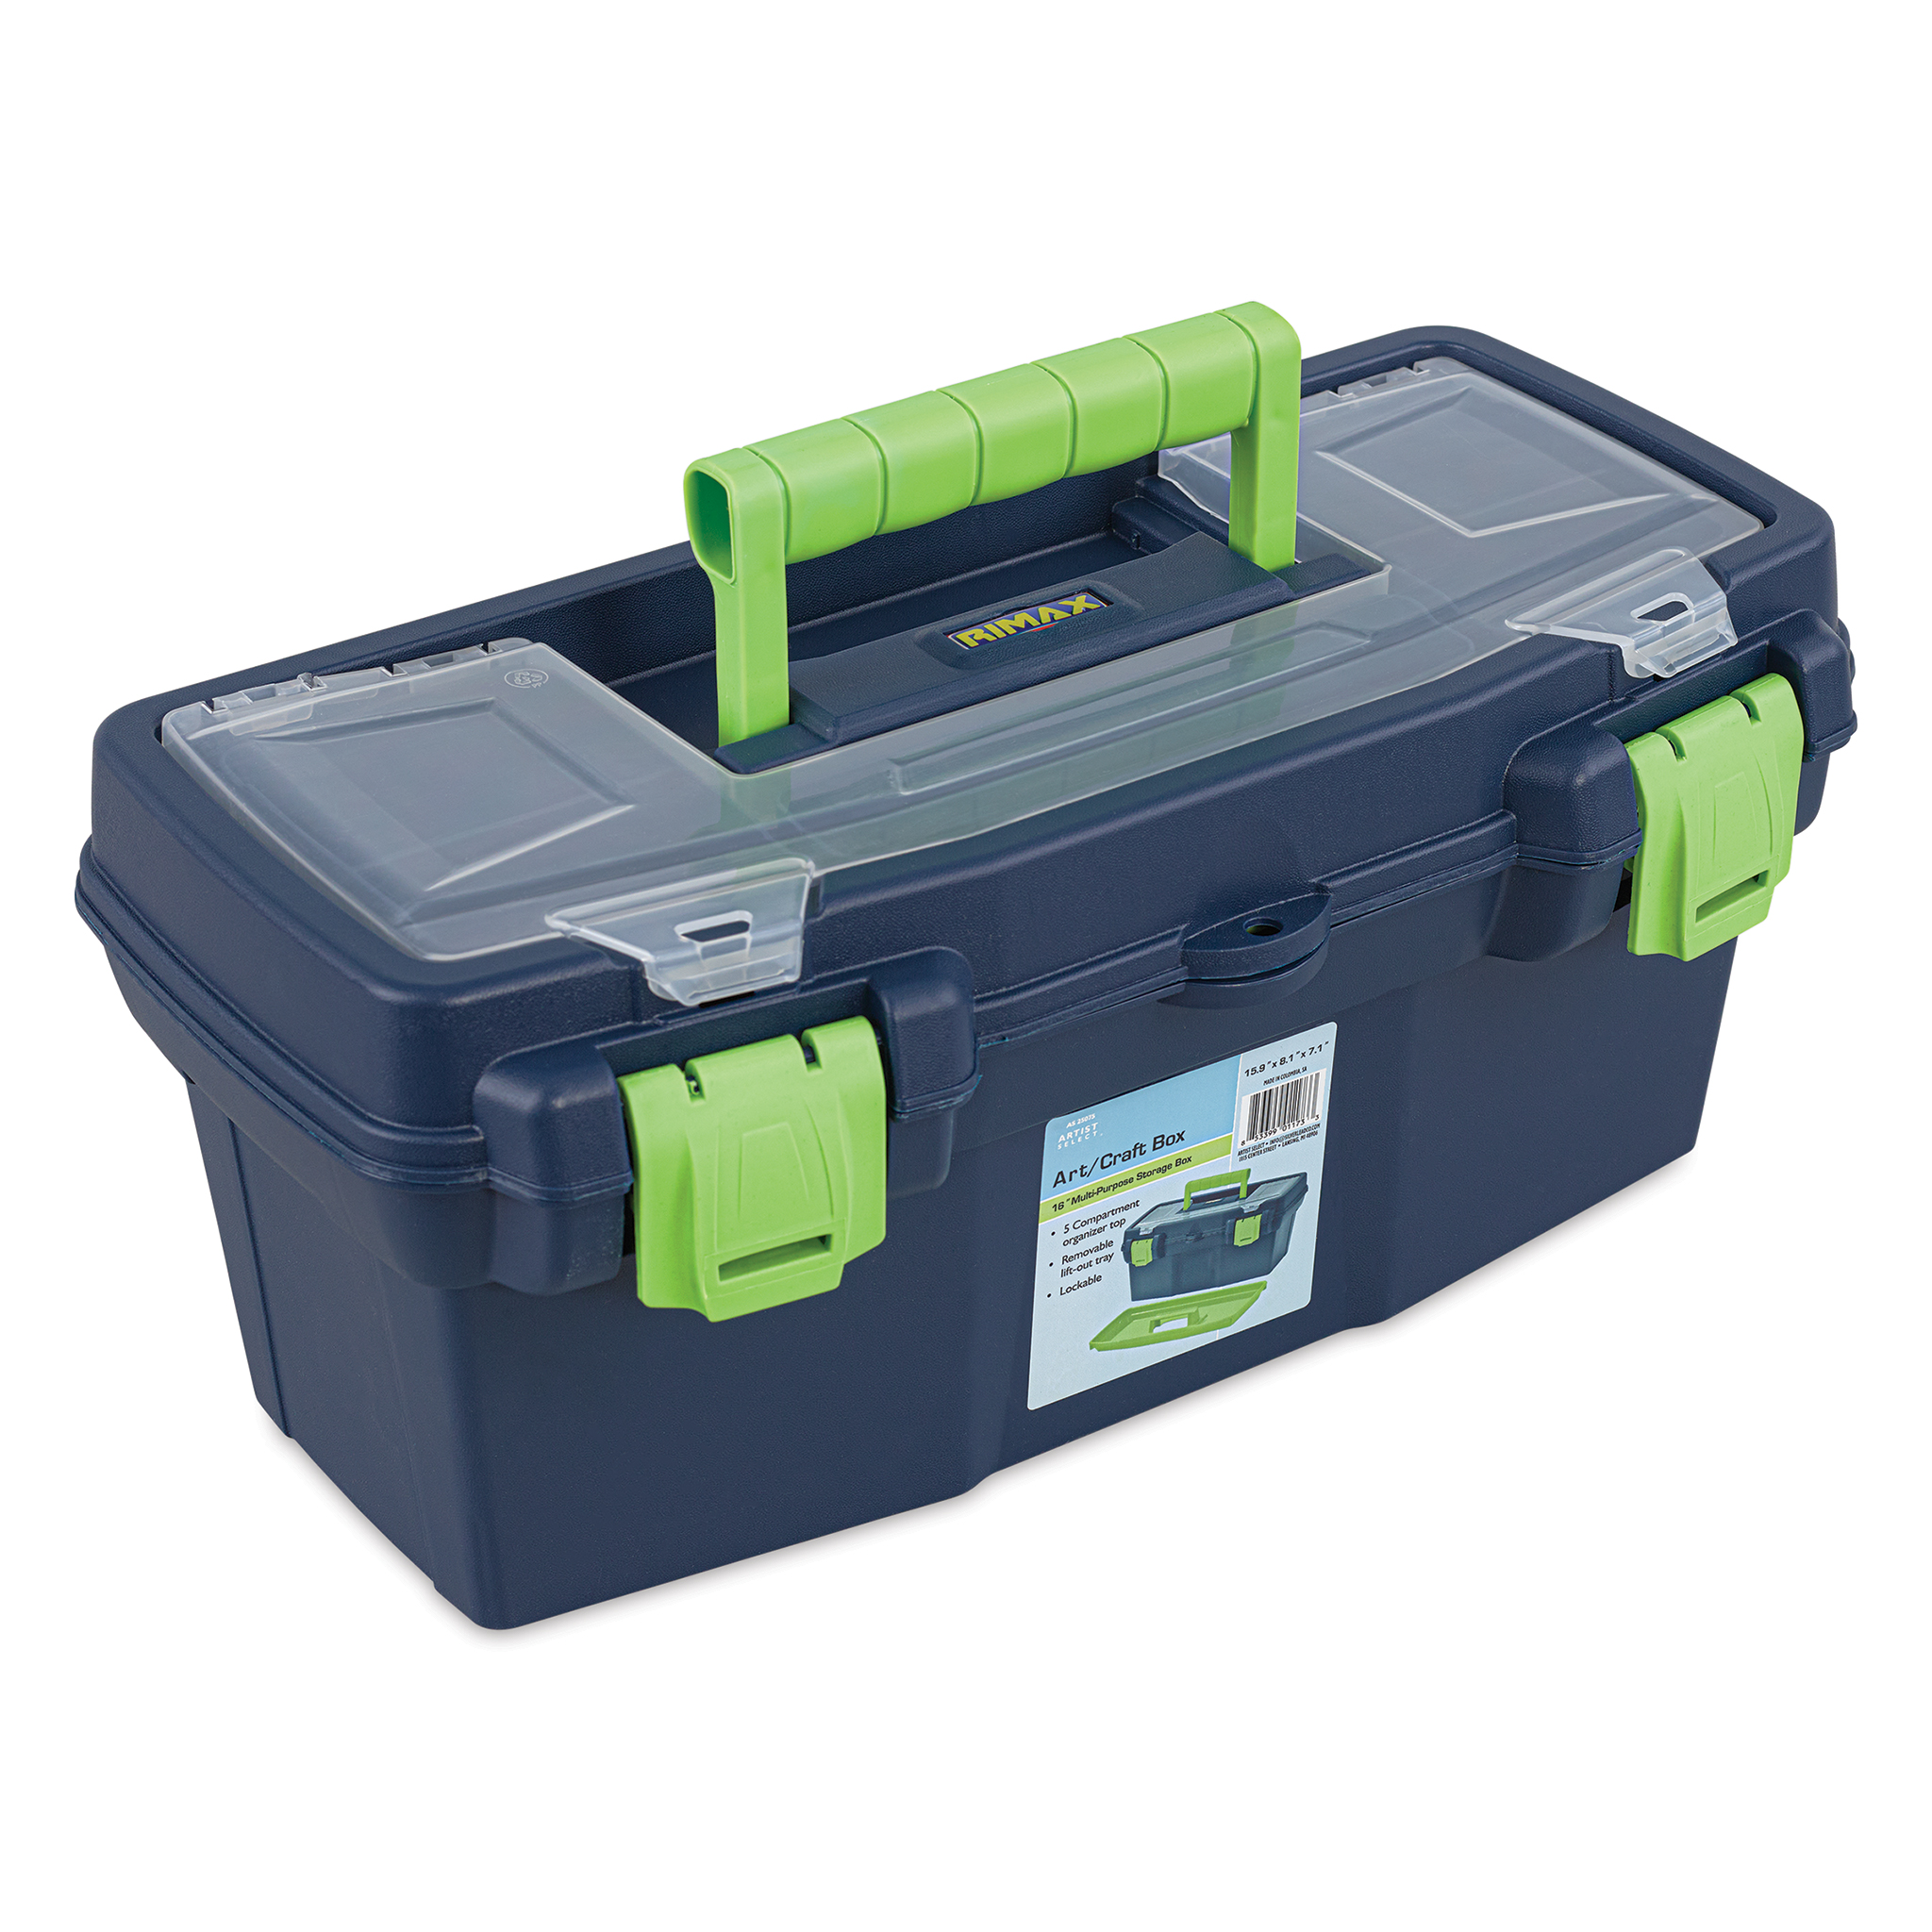 Pro Art® Translucent Storage Box with Organizer Top